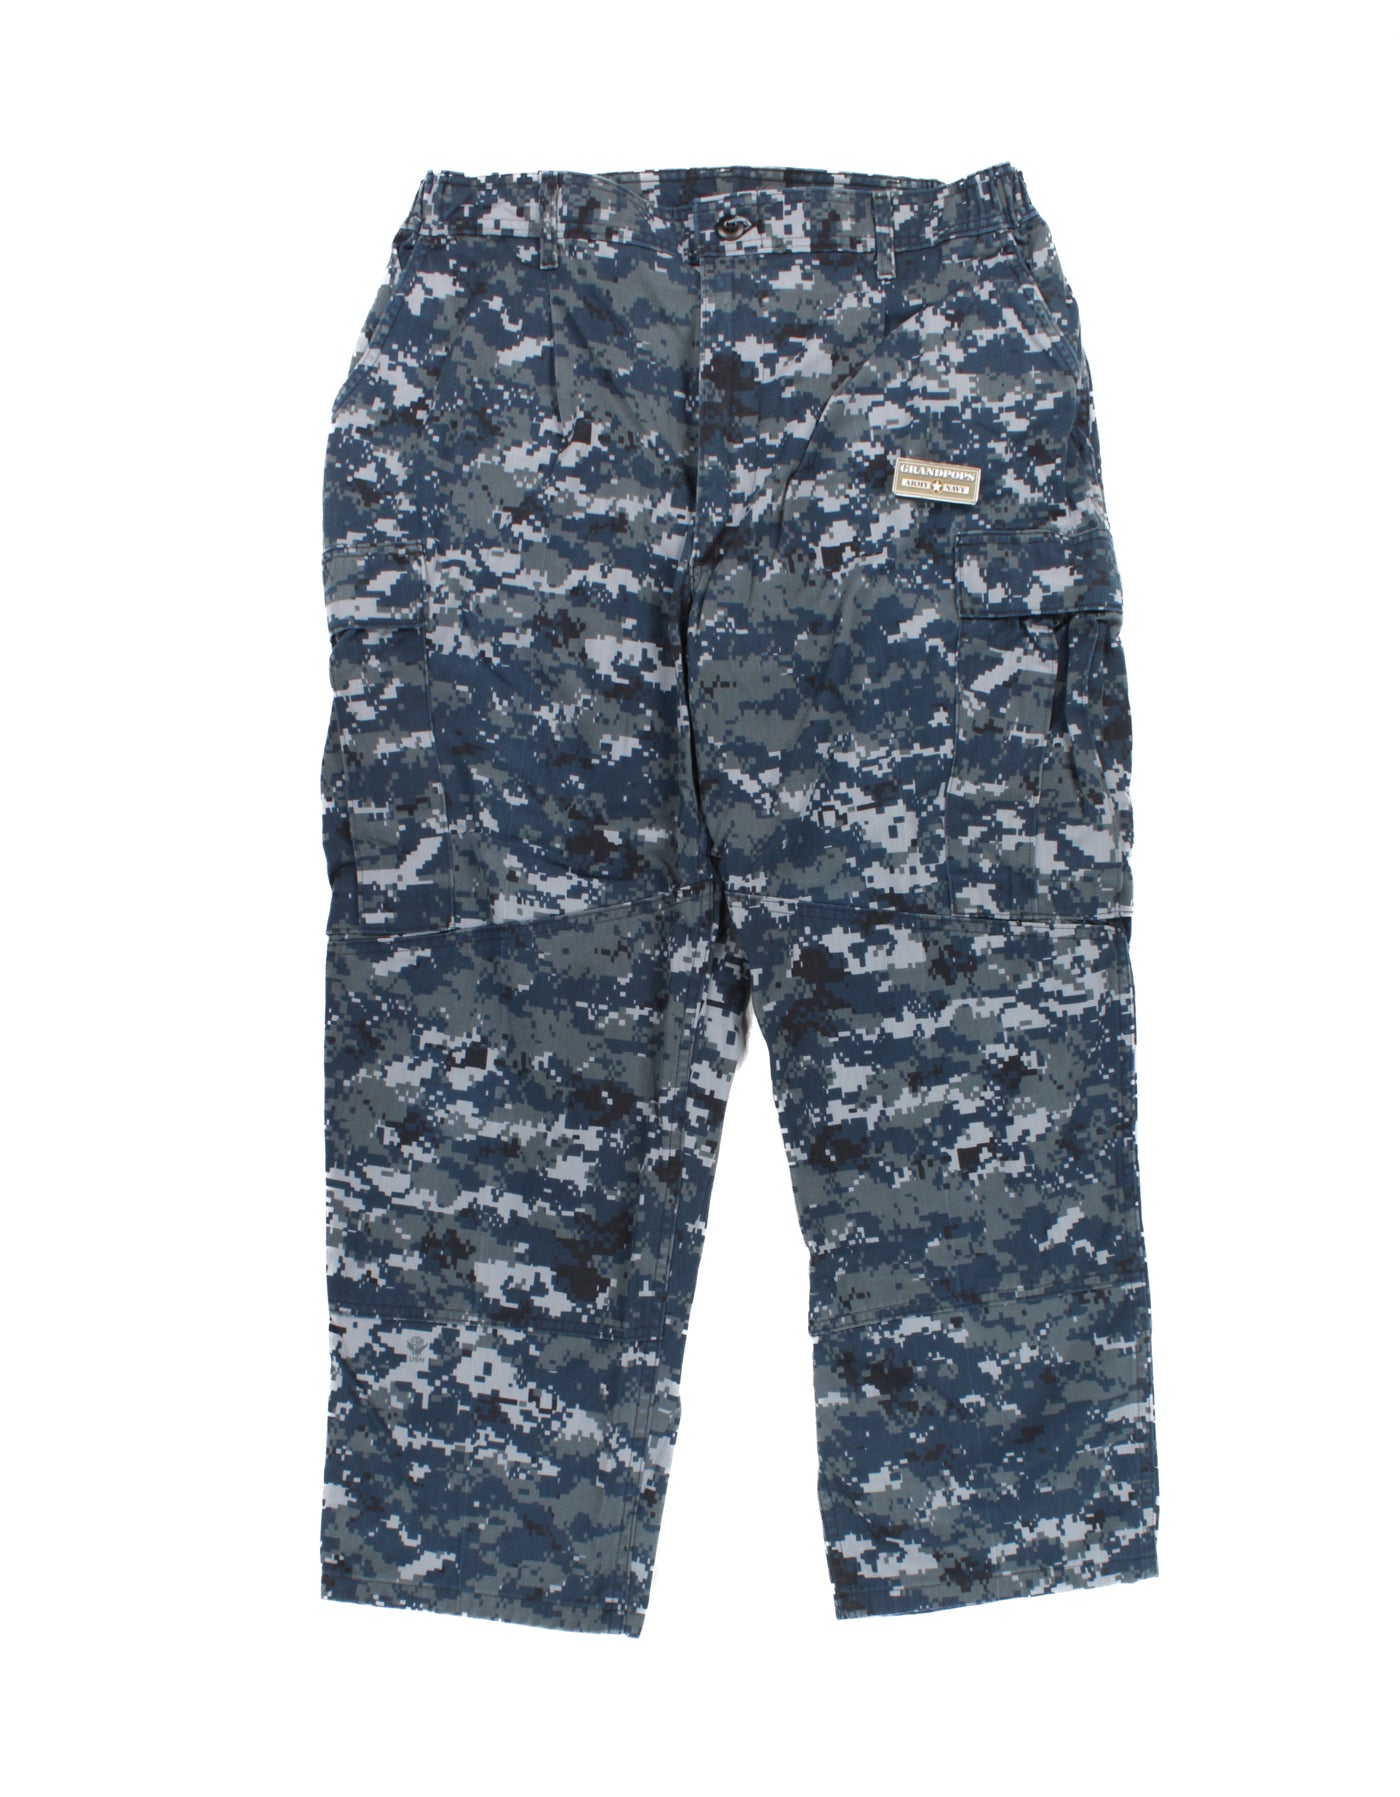 US Navy Issue NWU Blue Digital Camo Shirt